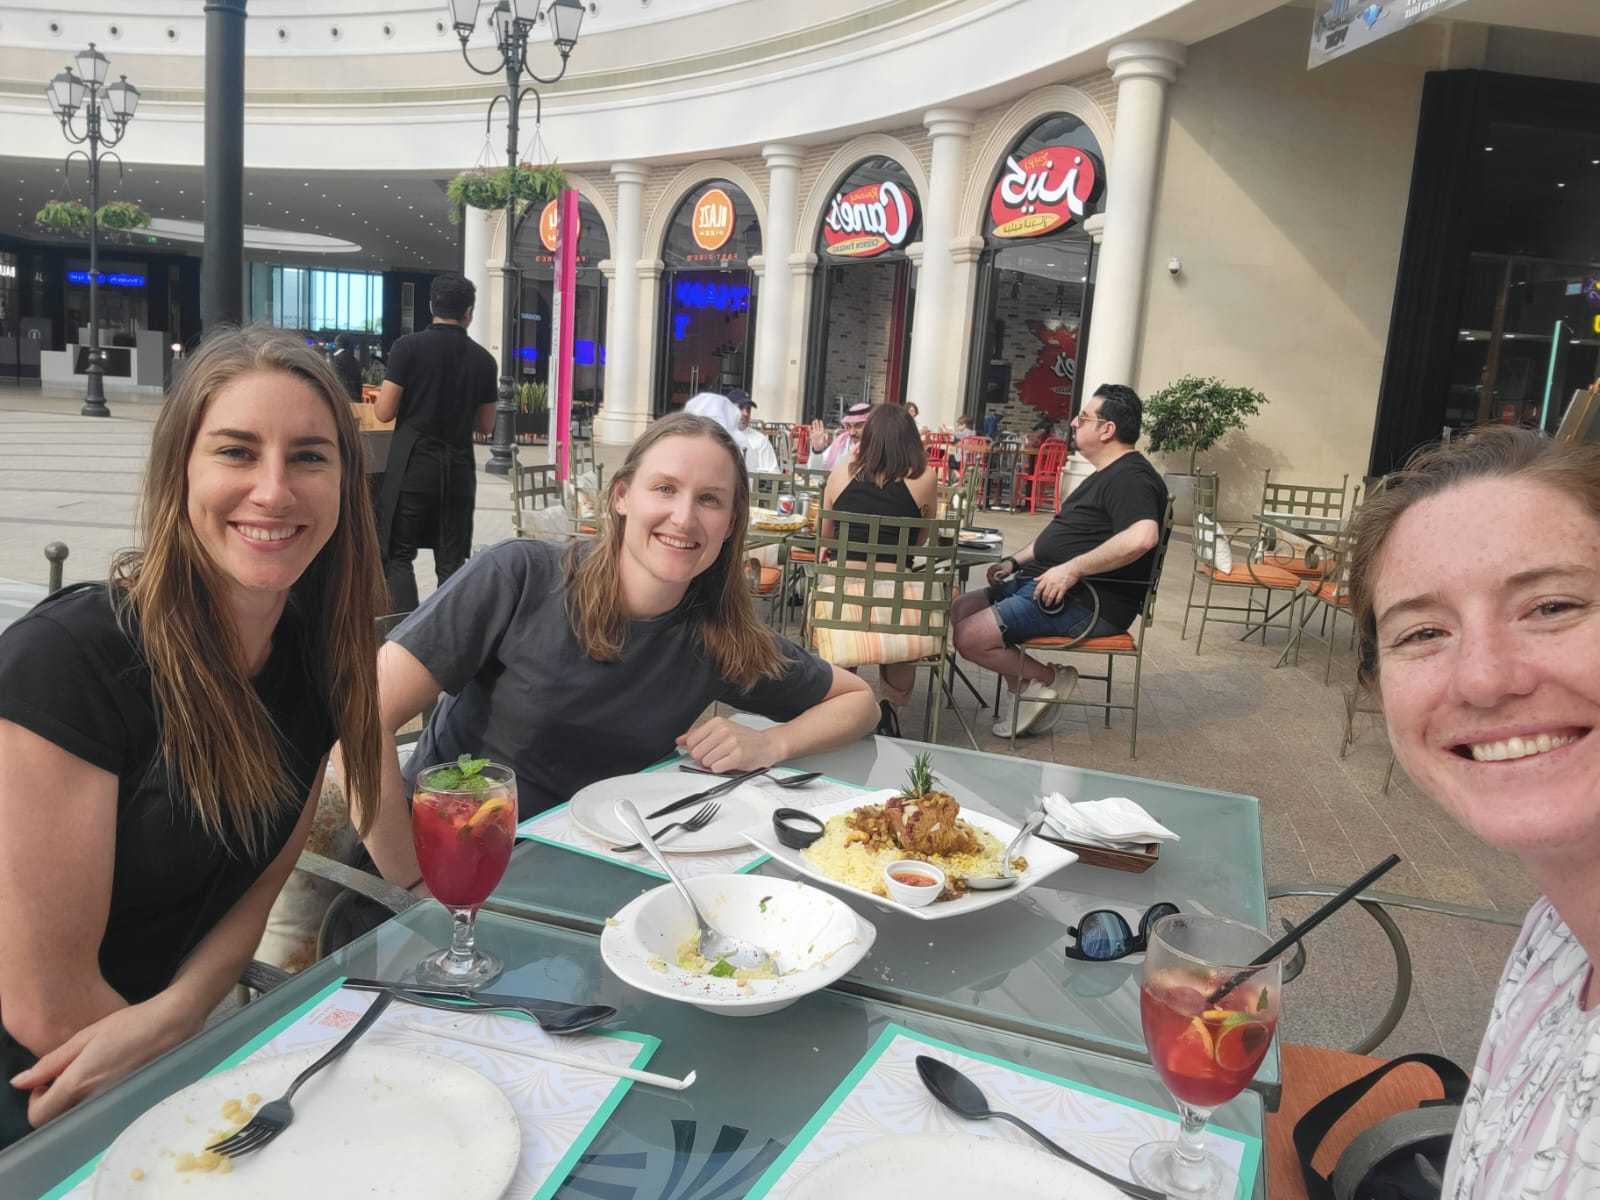 Selfie of three caucasian women at an outdoor restaurant in an urban setting